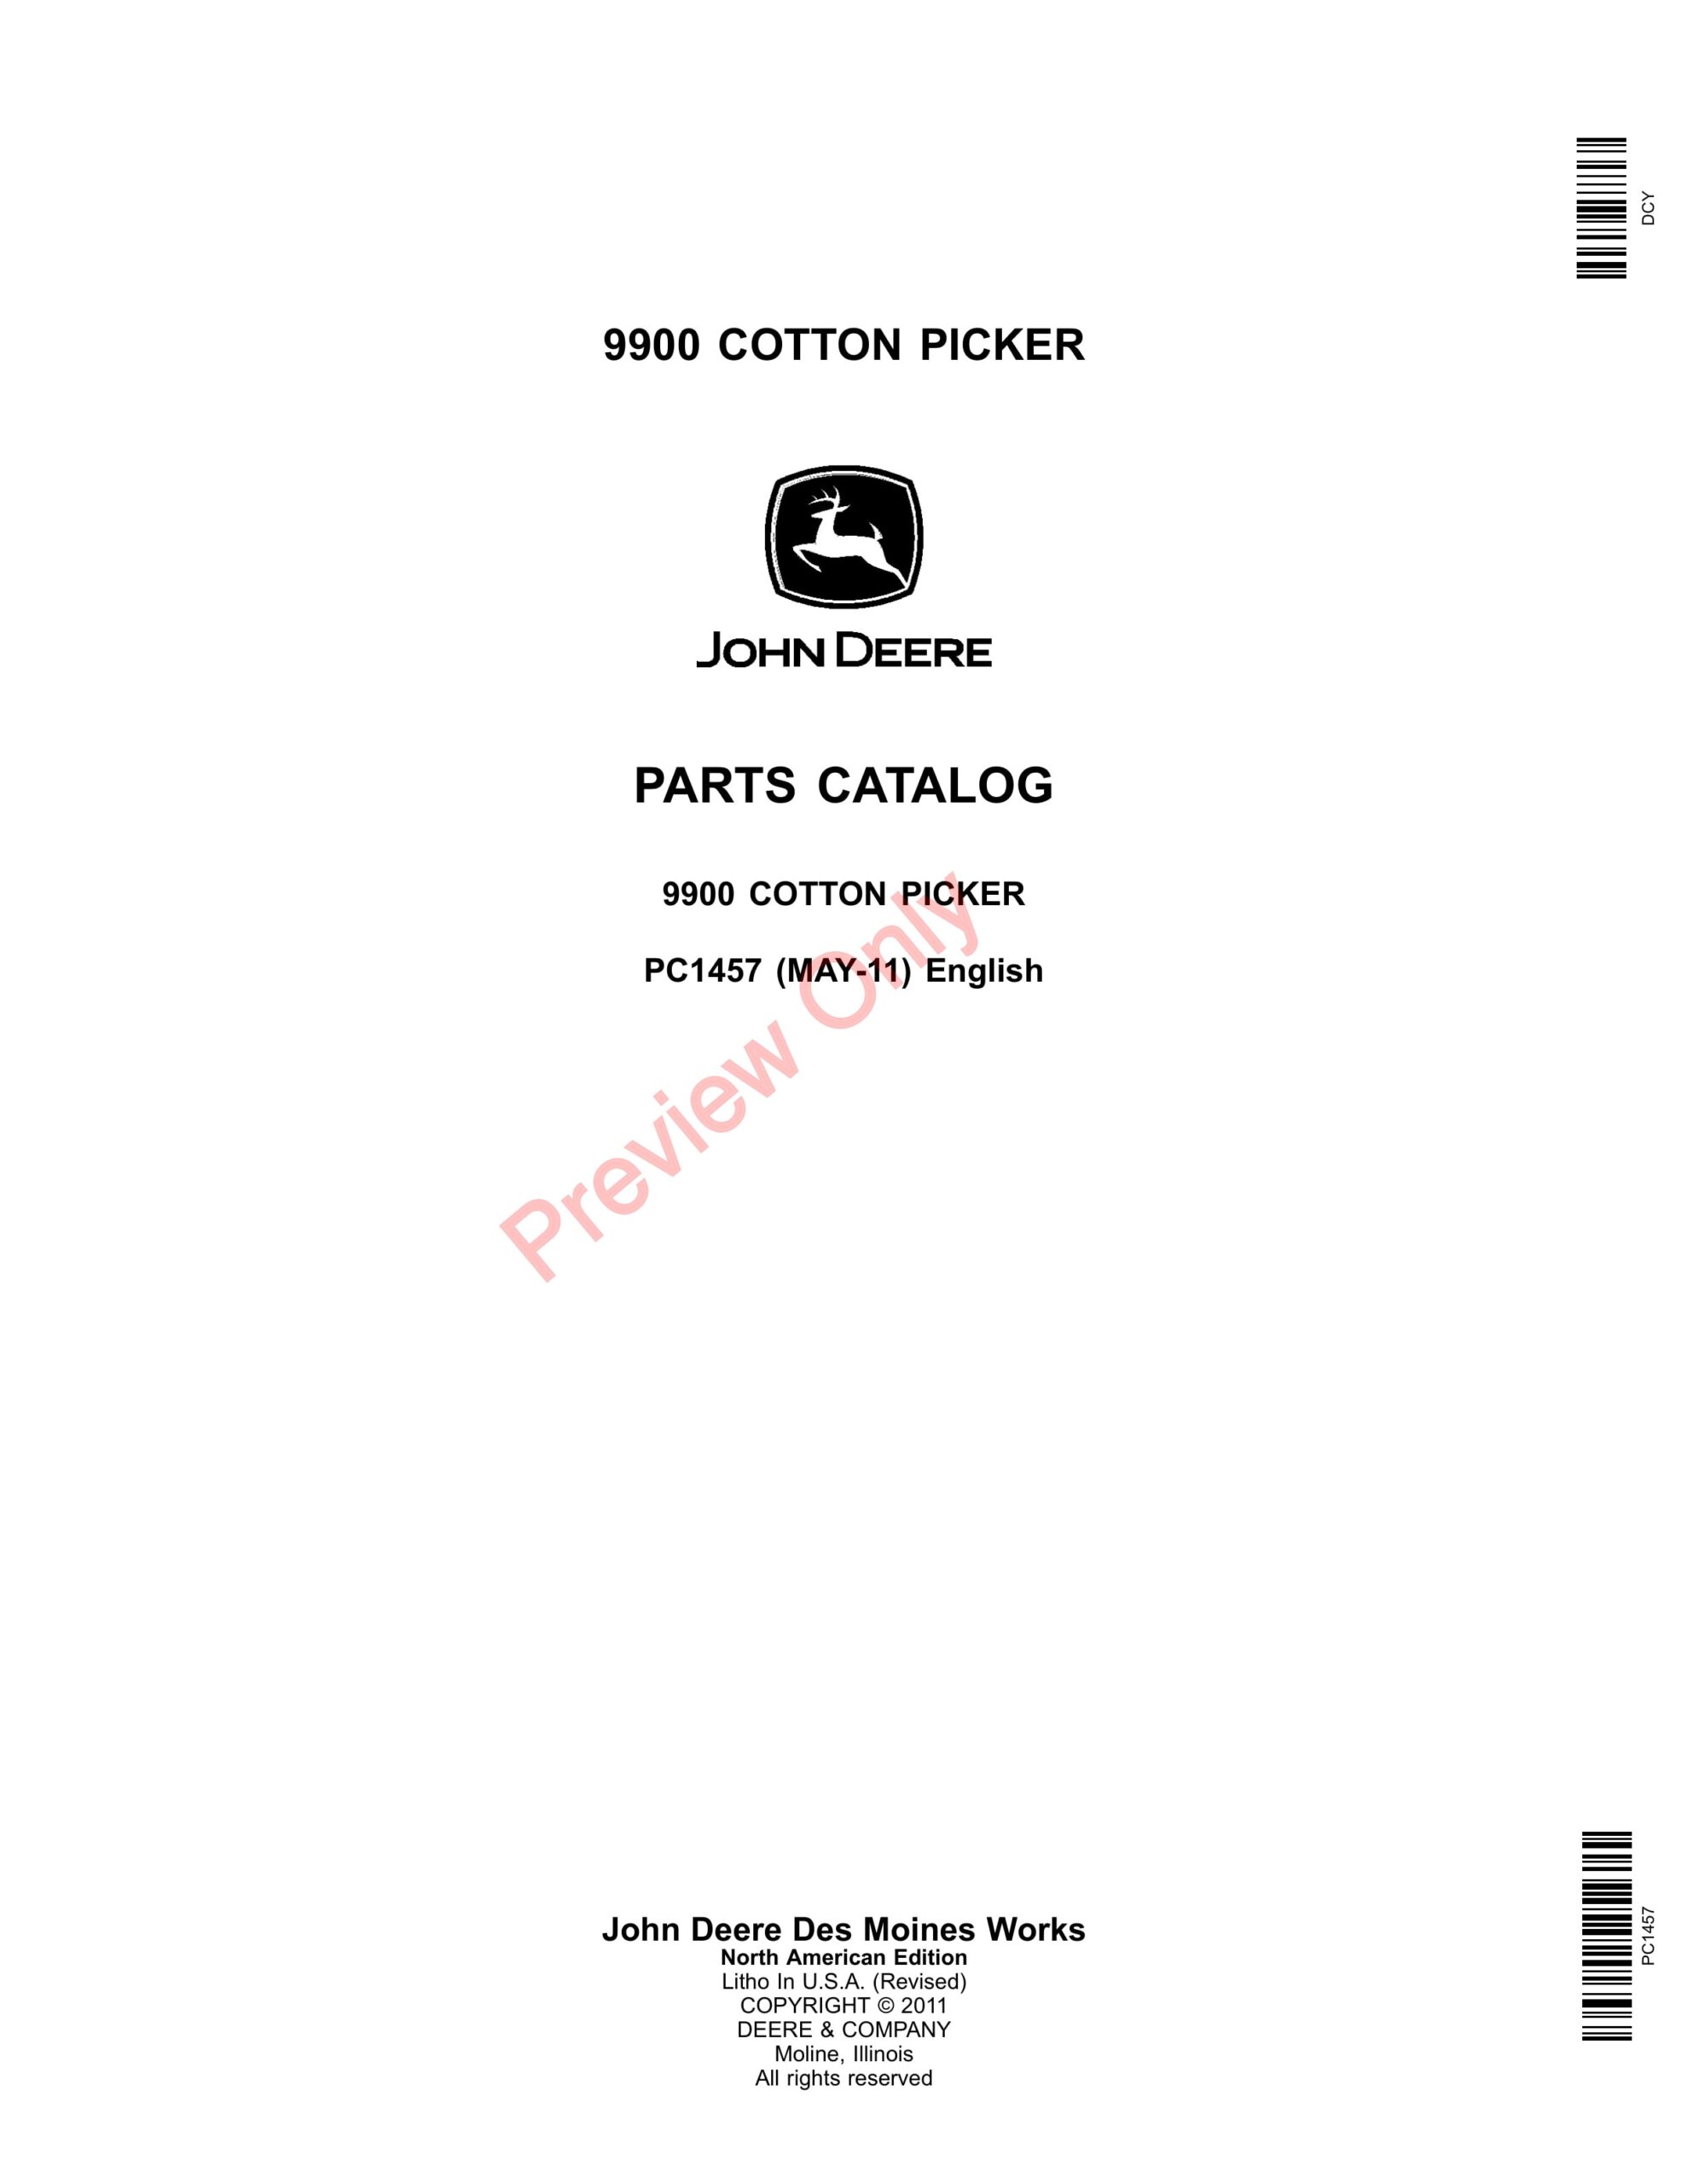 John Deere 9900 Cotton Picker Parts Catalog PC1457 13MAY11-1